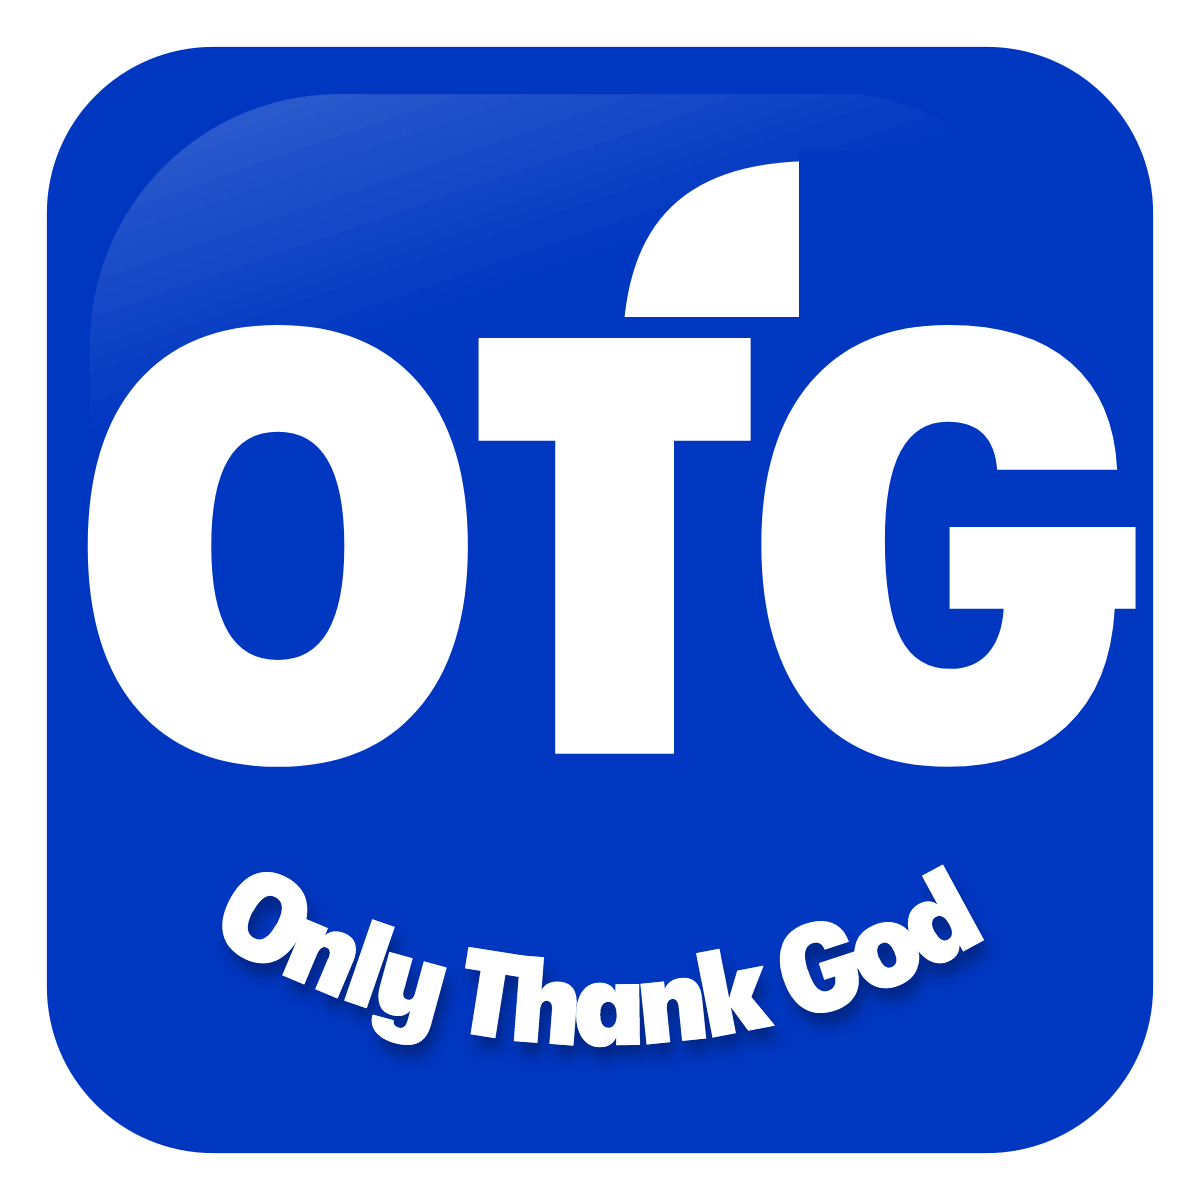 Only Thank God Network - Positive Social Media